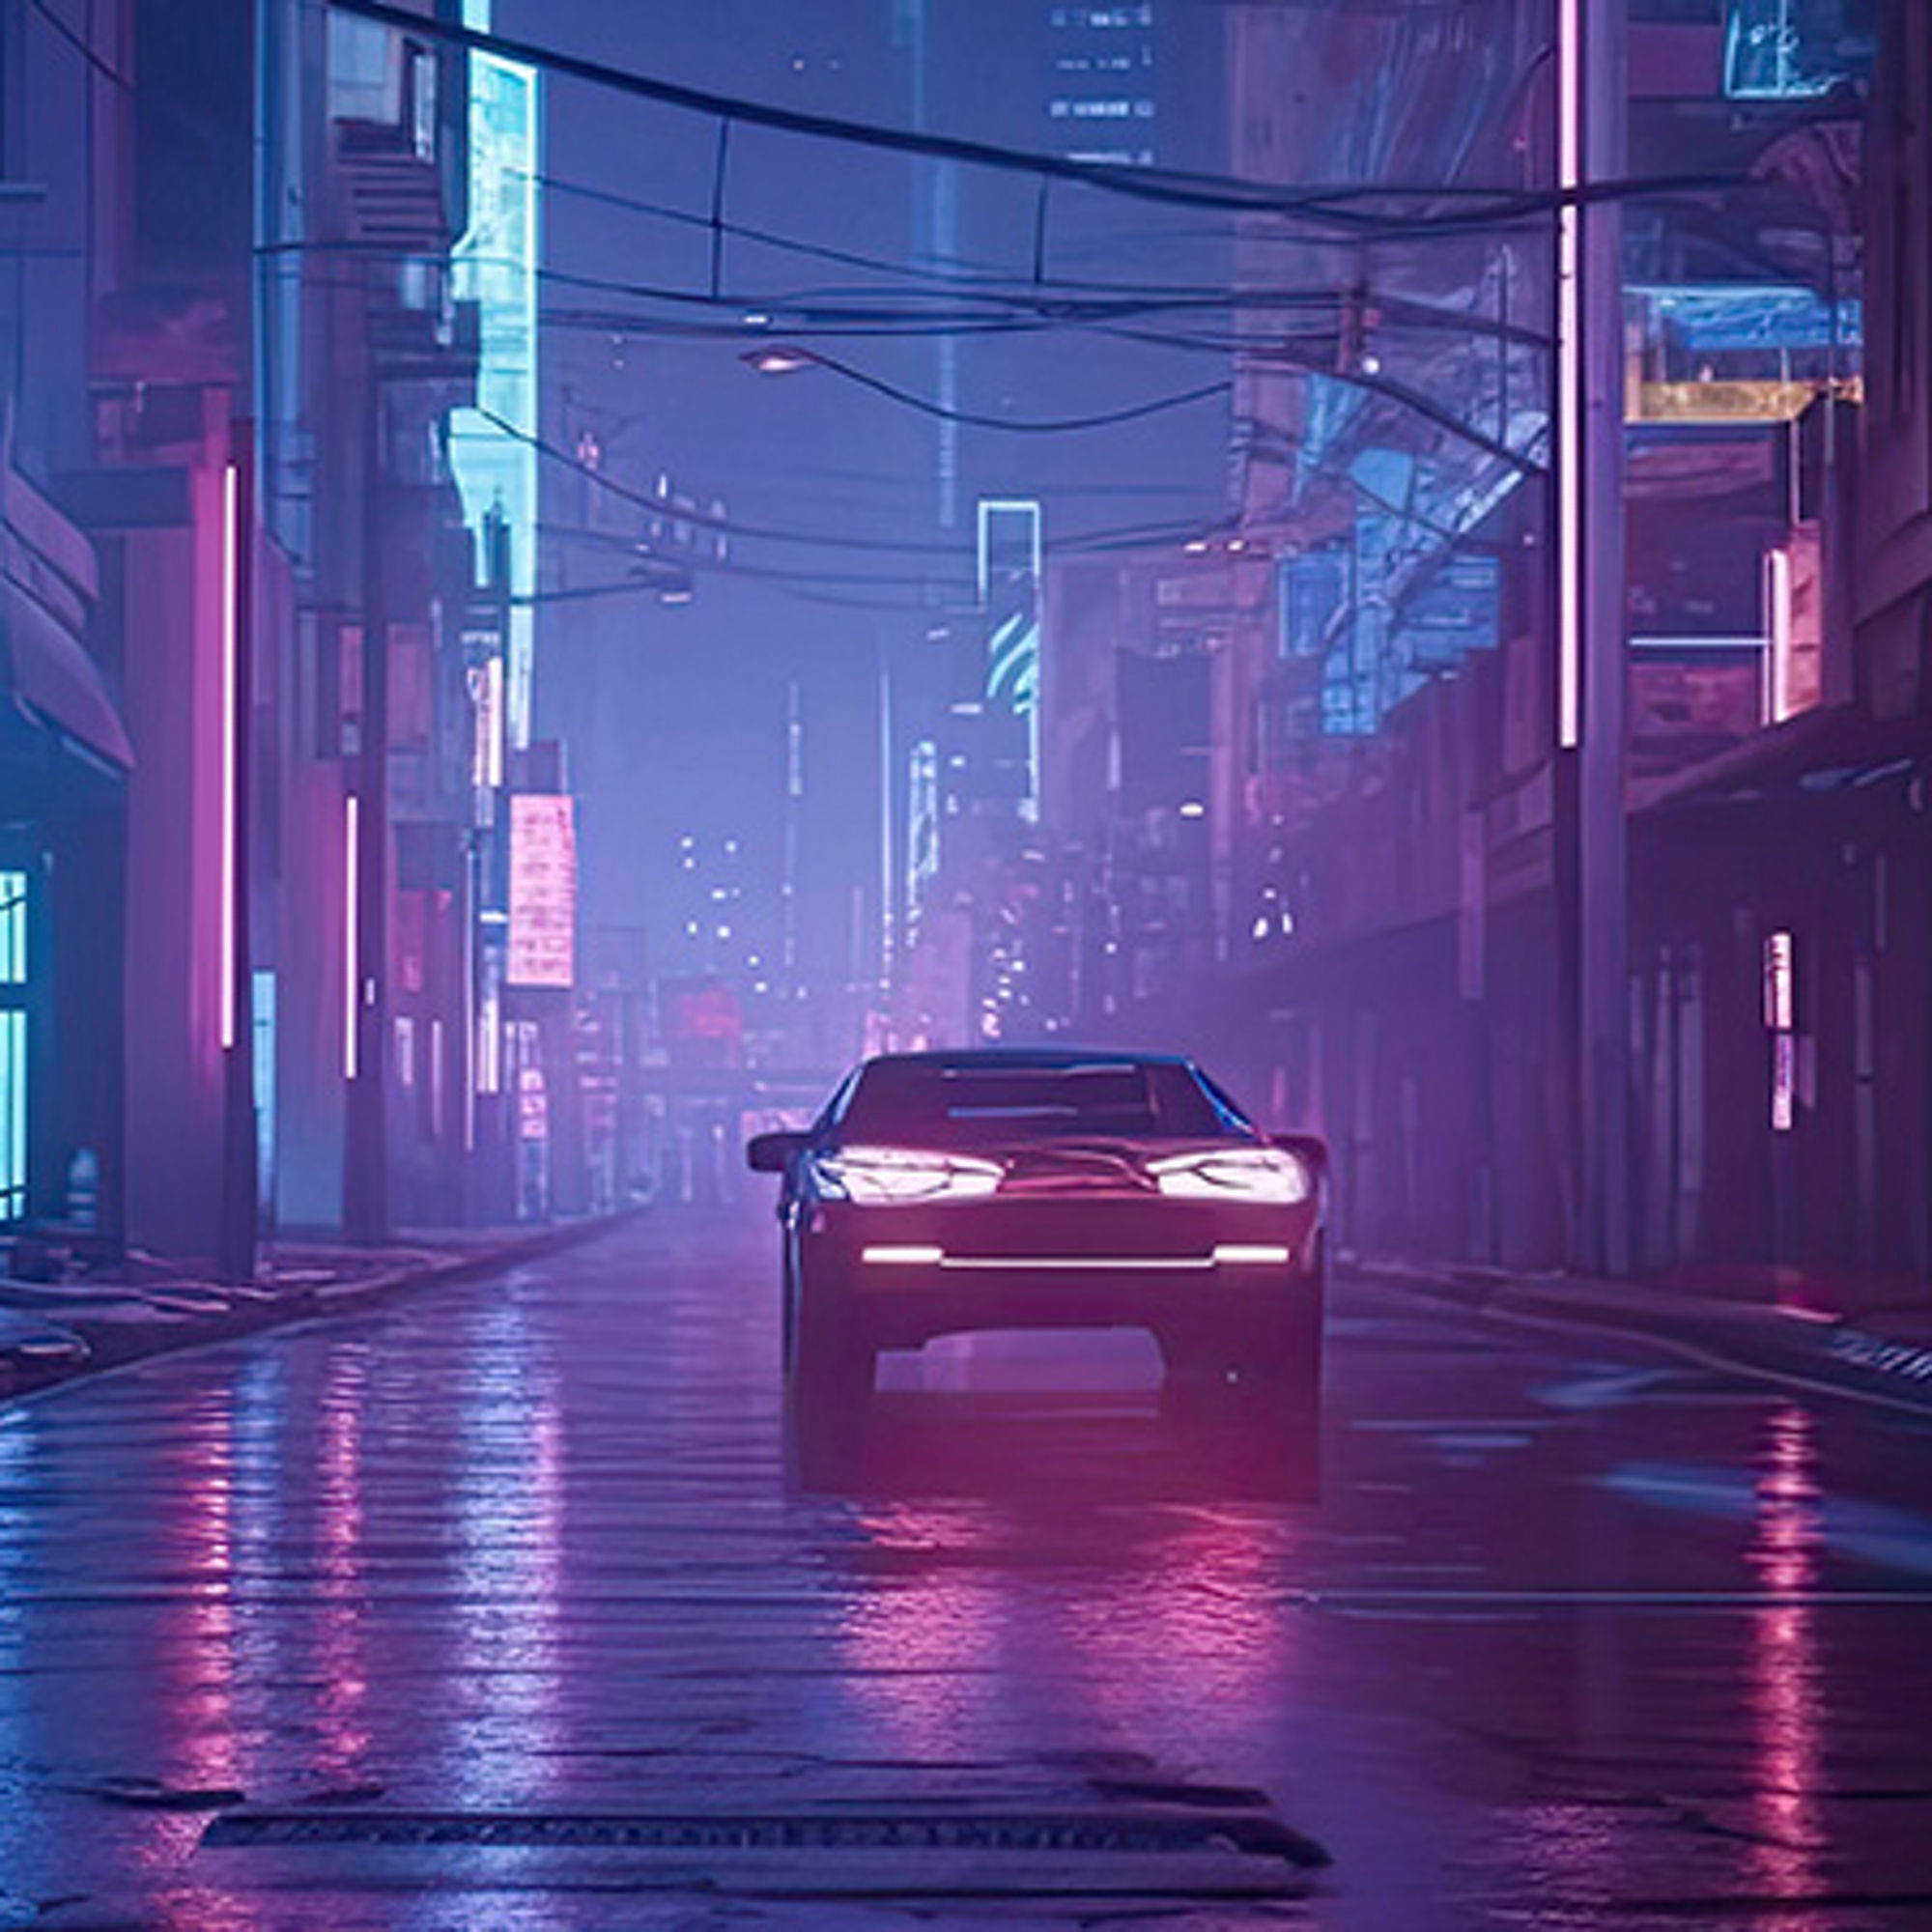 Far awy car in a dark and moody city allyway at night.